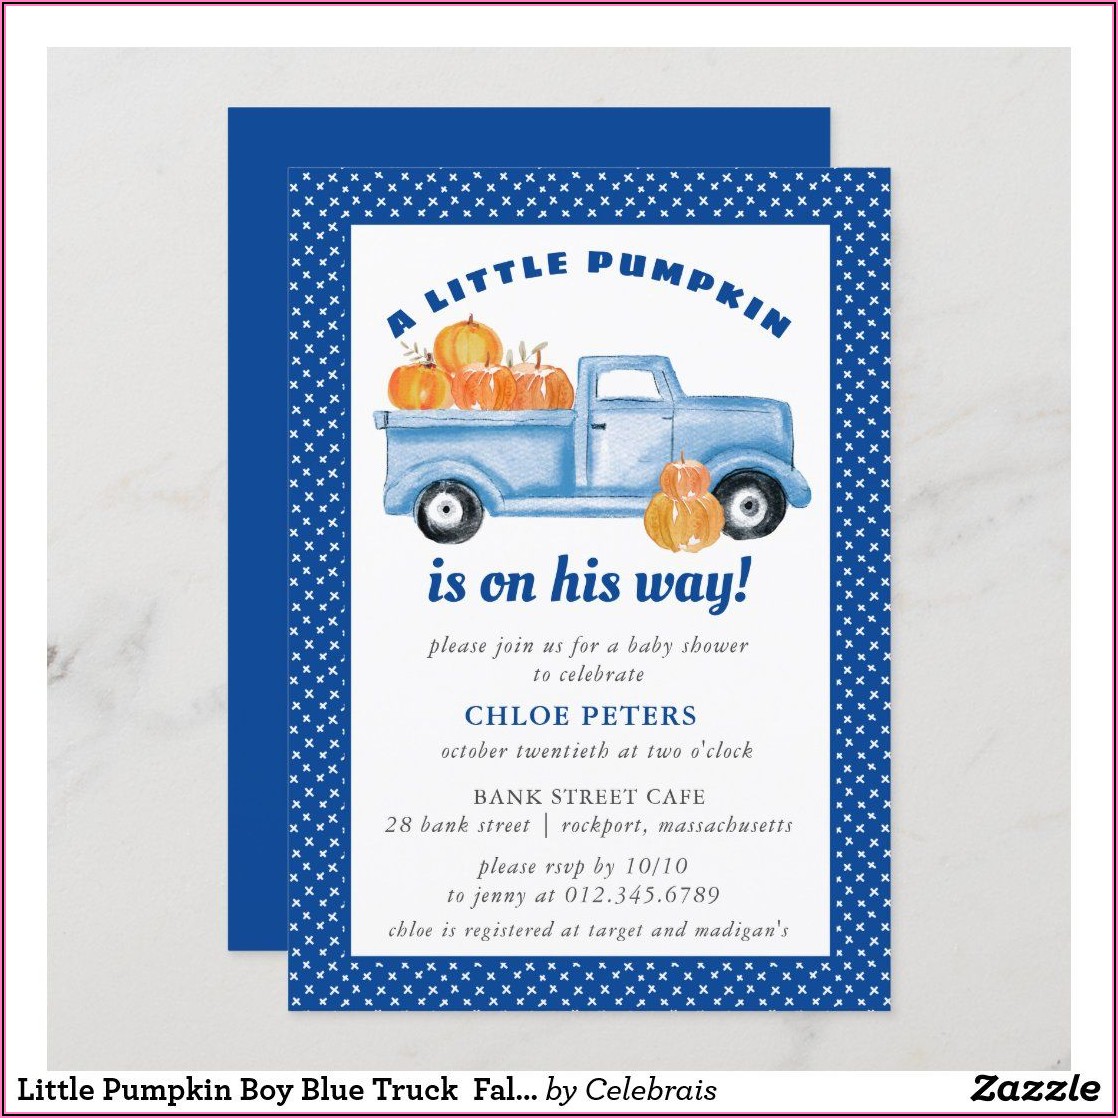 Little Blue Truck Baby Shower Invitations